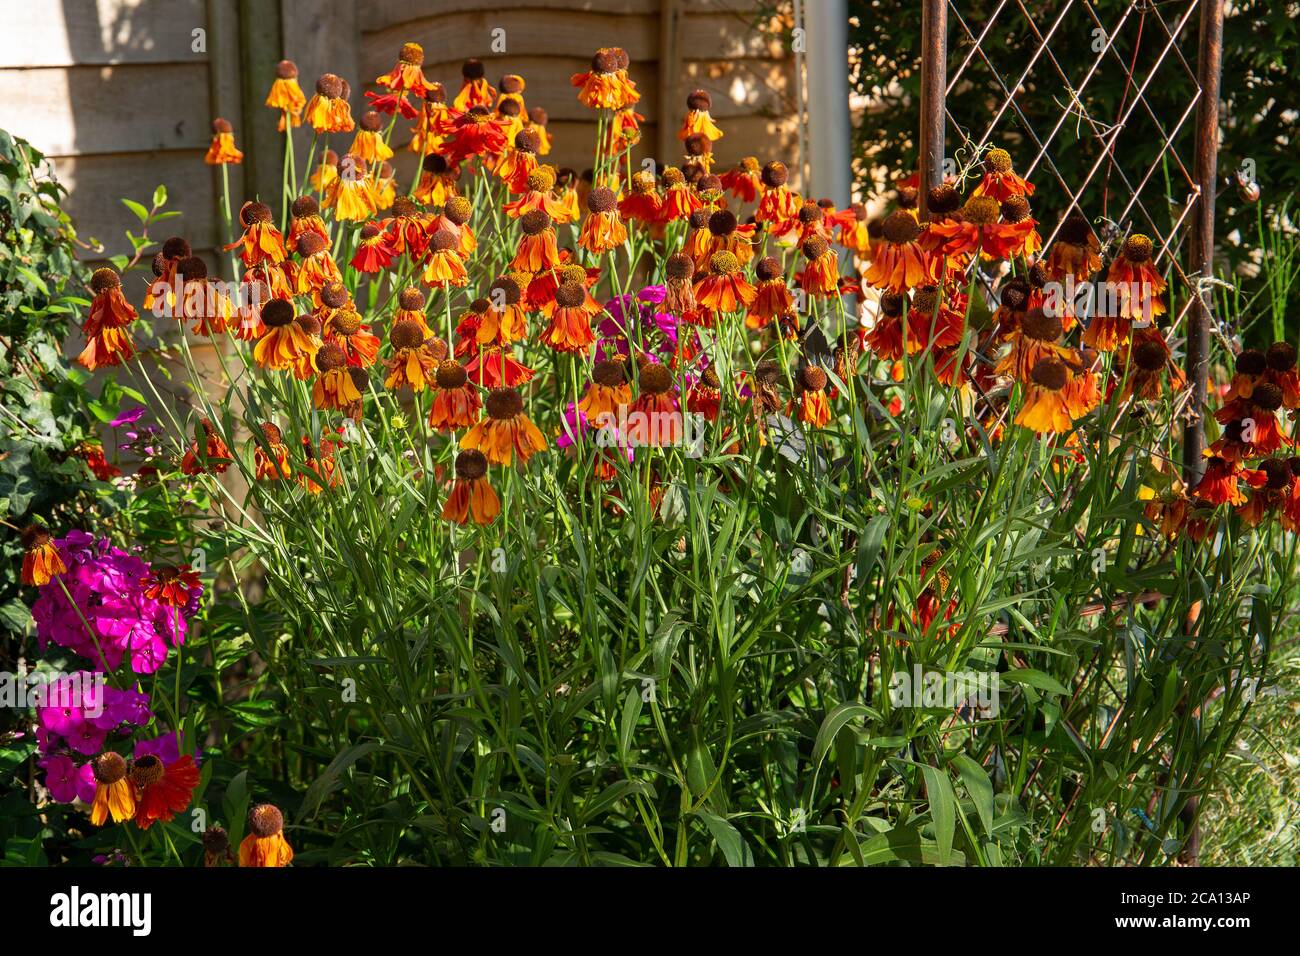 Helenium or sneezeweed adding a burst of bright orange colour to set your garden alight Stock Photo